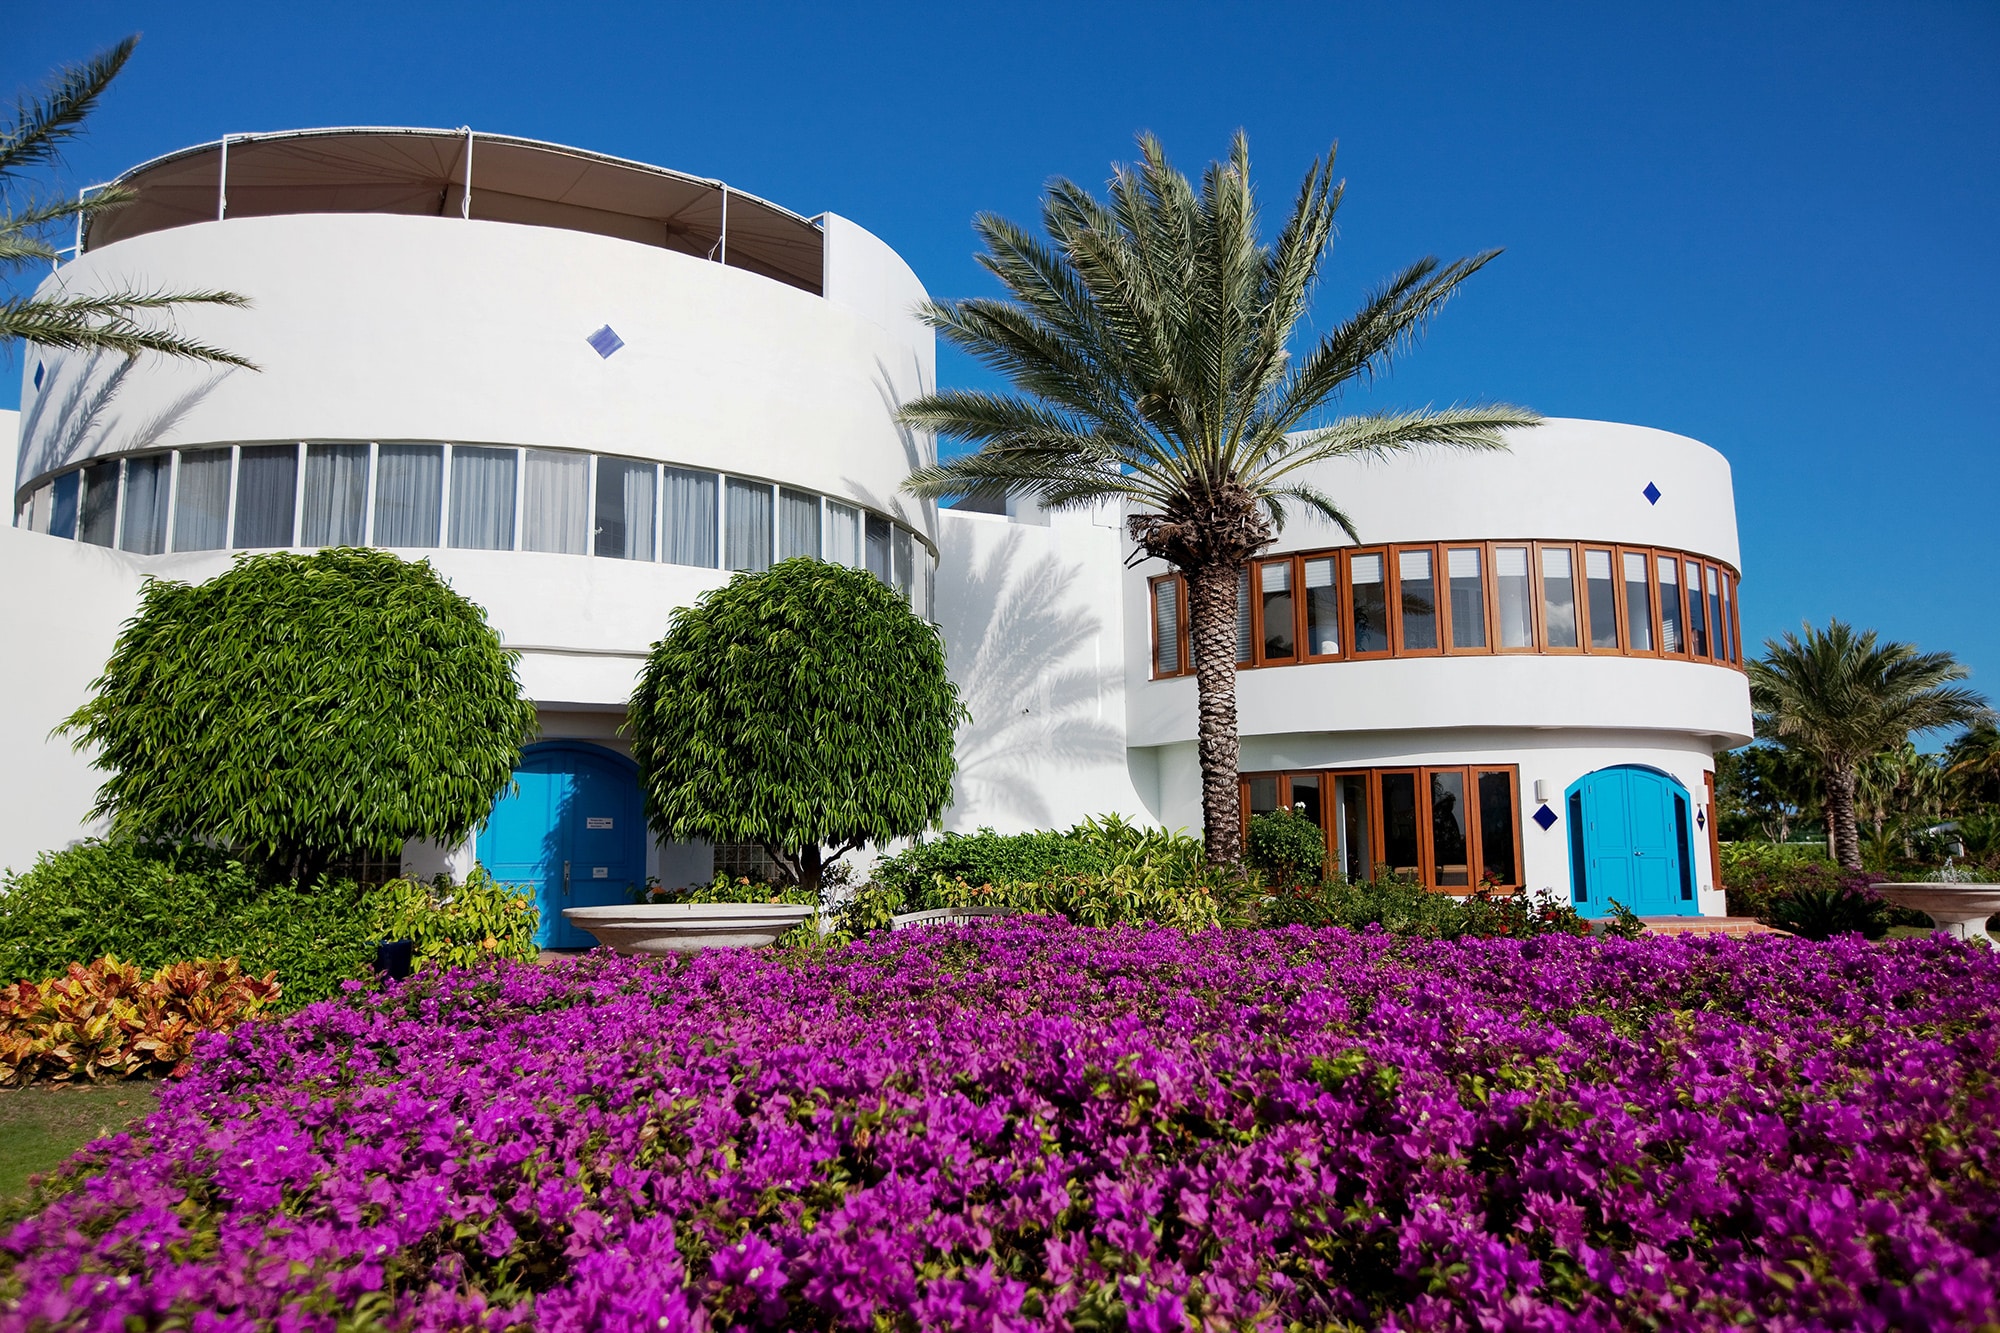 Best Hotel Spas in the Caribbean: CuisinArt Golf Resort & Spa